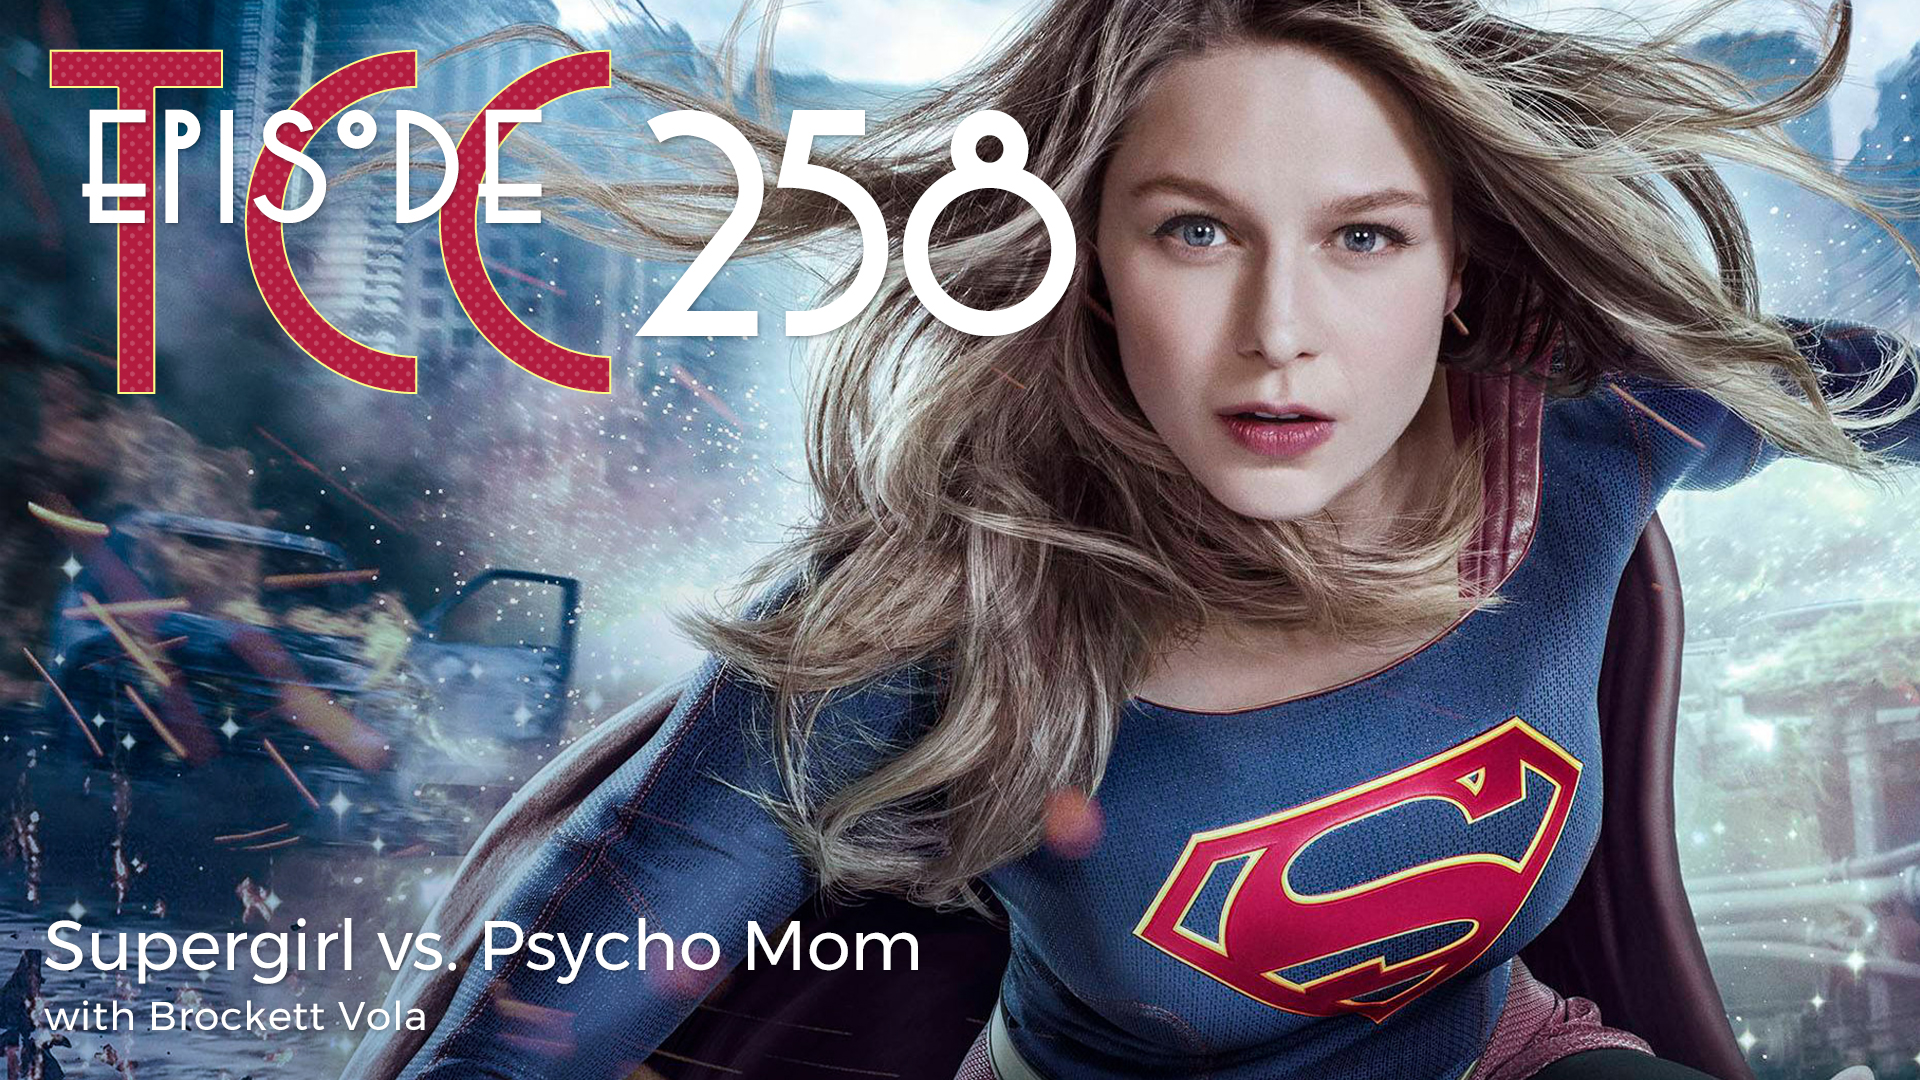 The Citadel Cafe 258: Supergirl vs. Psycho Mom